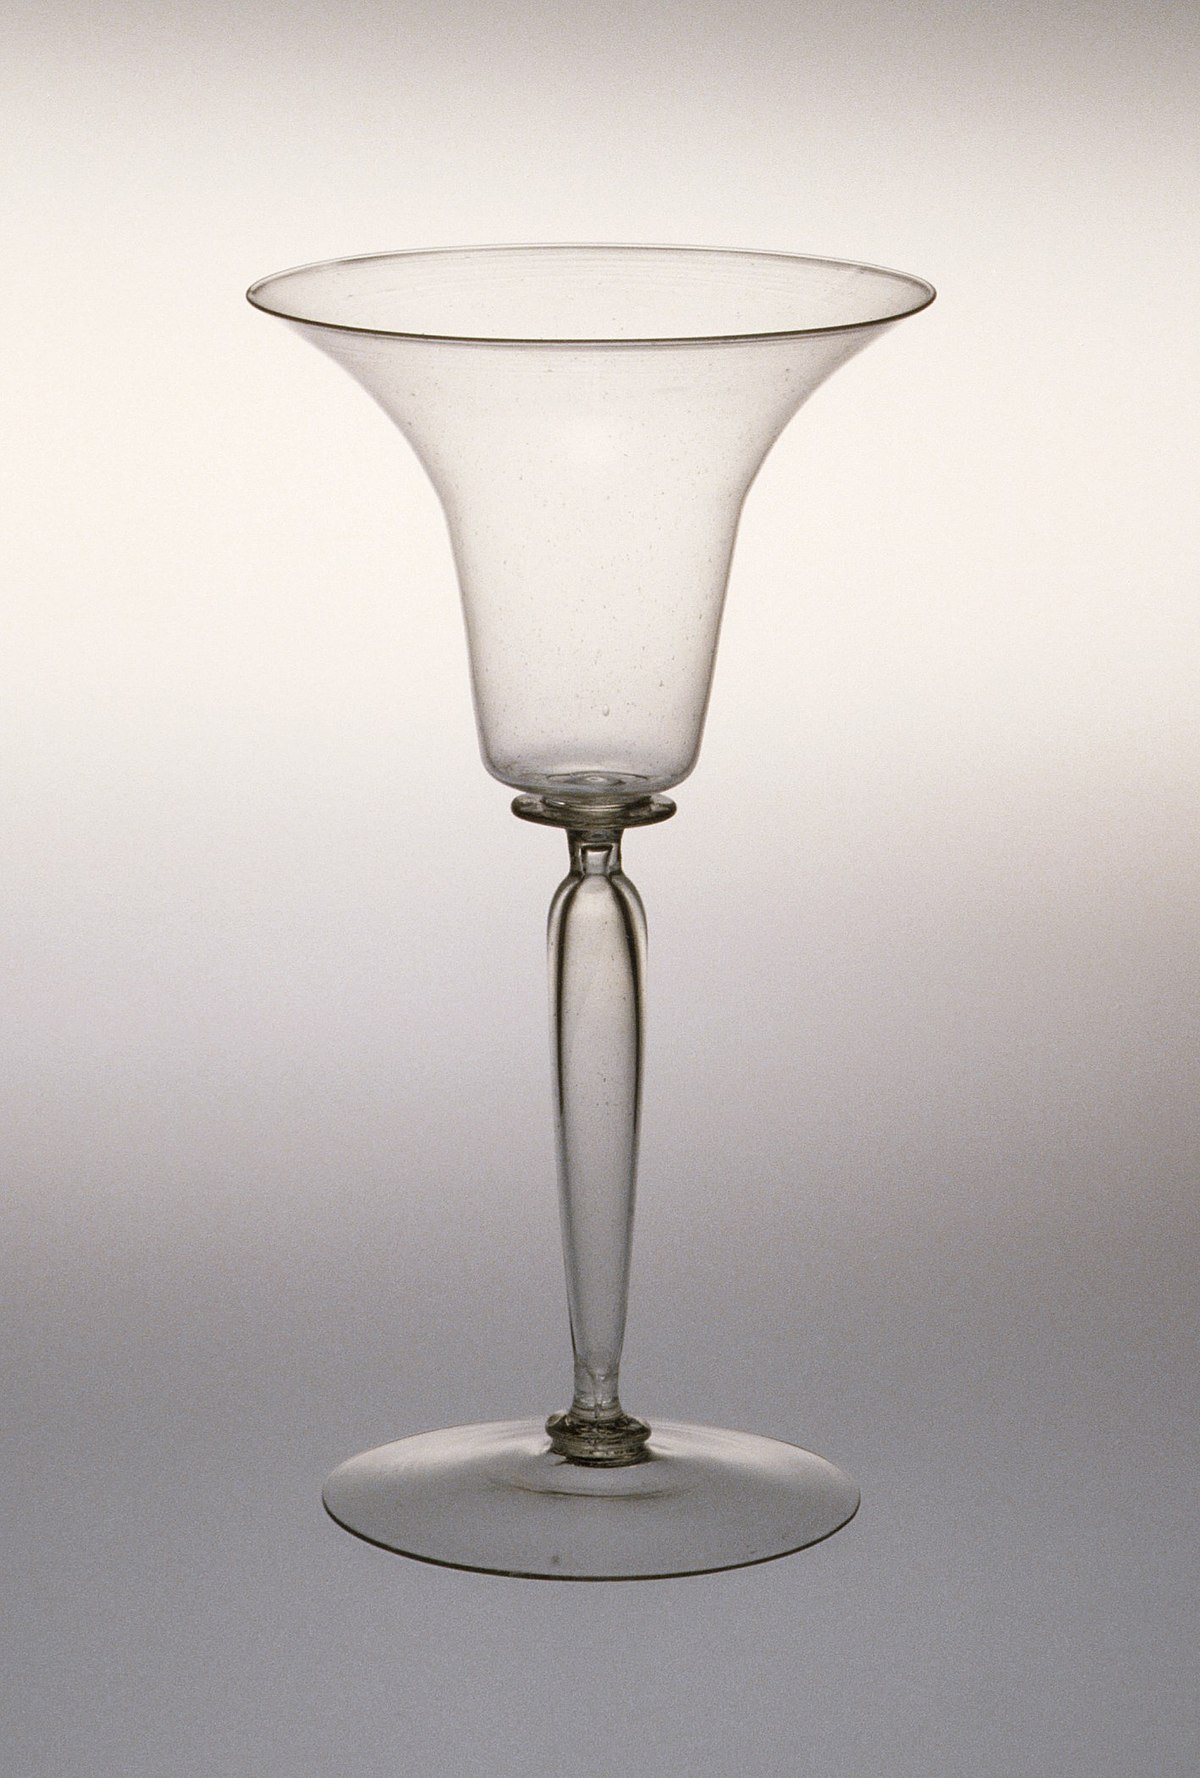 https://upload.wikimedia.org/wikipedia/commons/thumb/f/f7/Drinking_Glass_LACMA_M.85.150.15.jpg/1200px-Drinking_Glass_LACMA_M.85.150.15.jpg